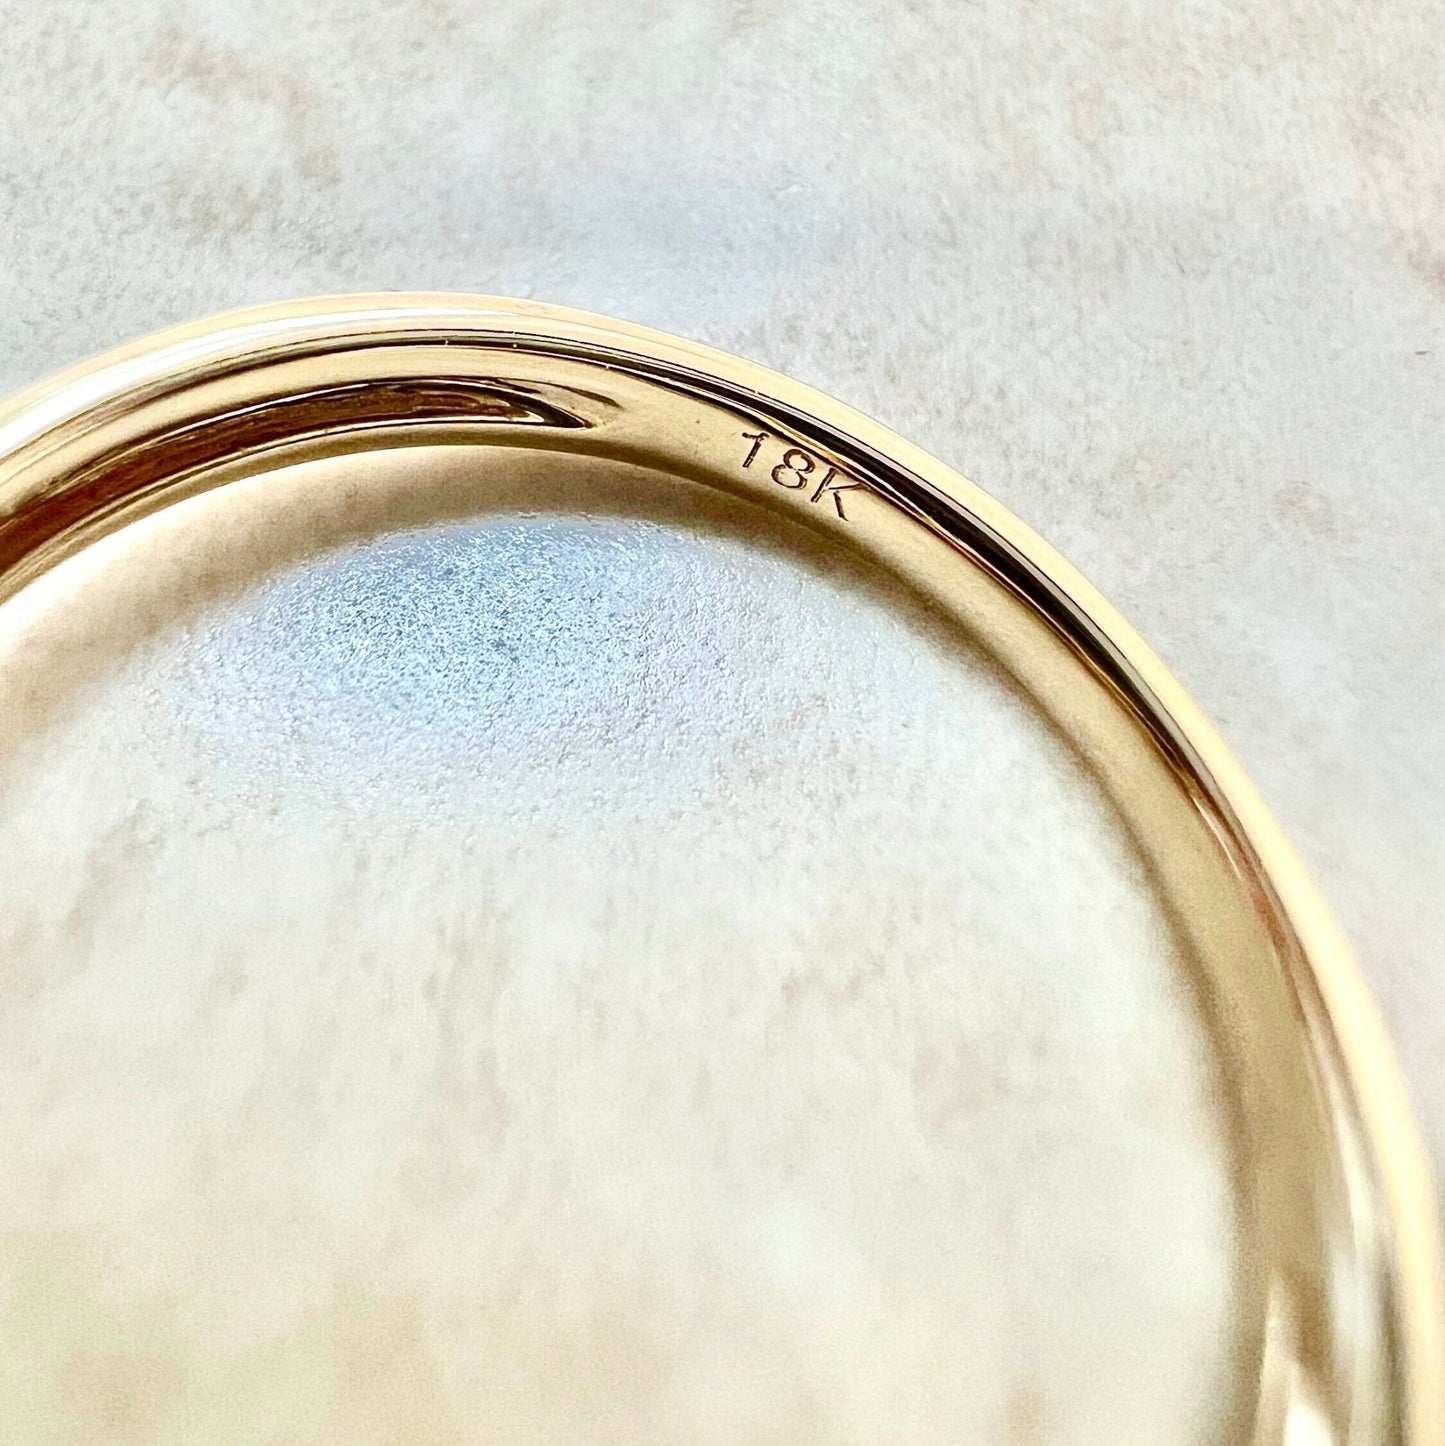 18K Aquamarine & Sapphire Ring  - Yellow Gold Aquamarine Ring - Three Stone Aquamarine Ring - Aquamarine Engagement Ring - Birthstone Rings